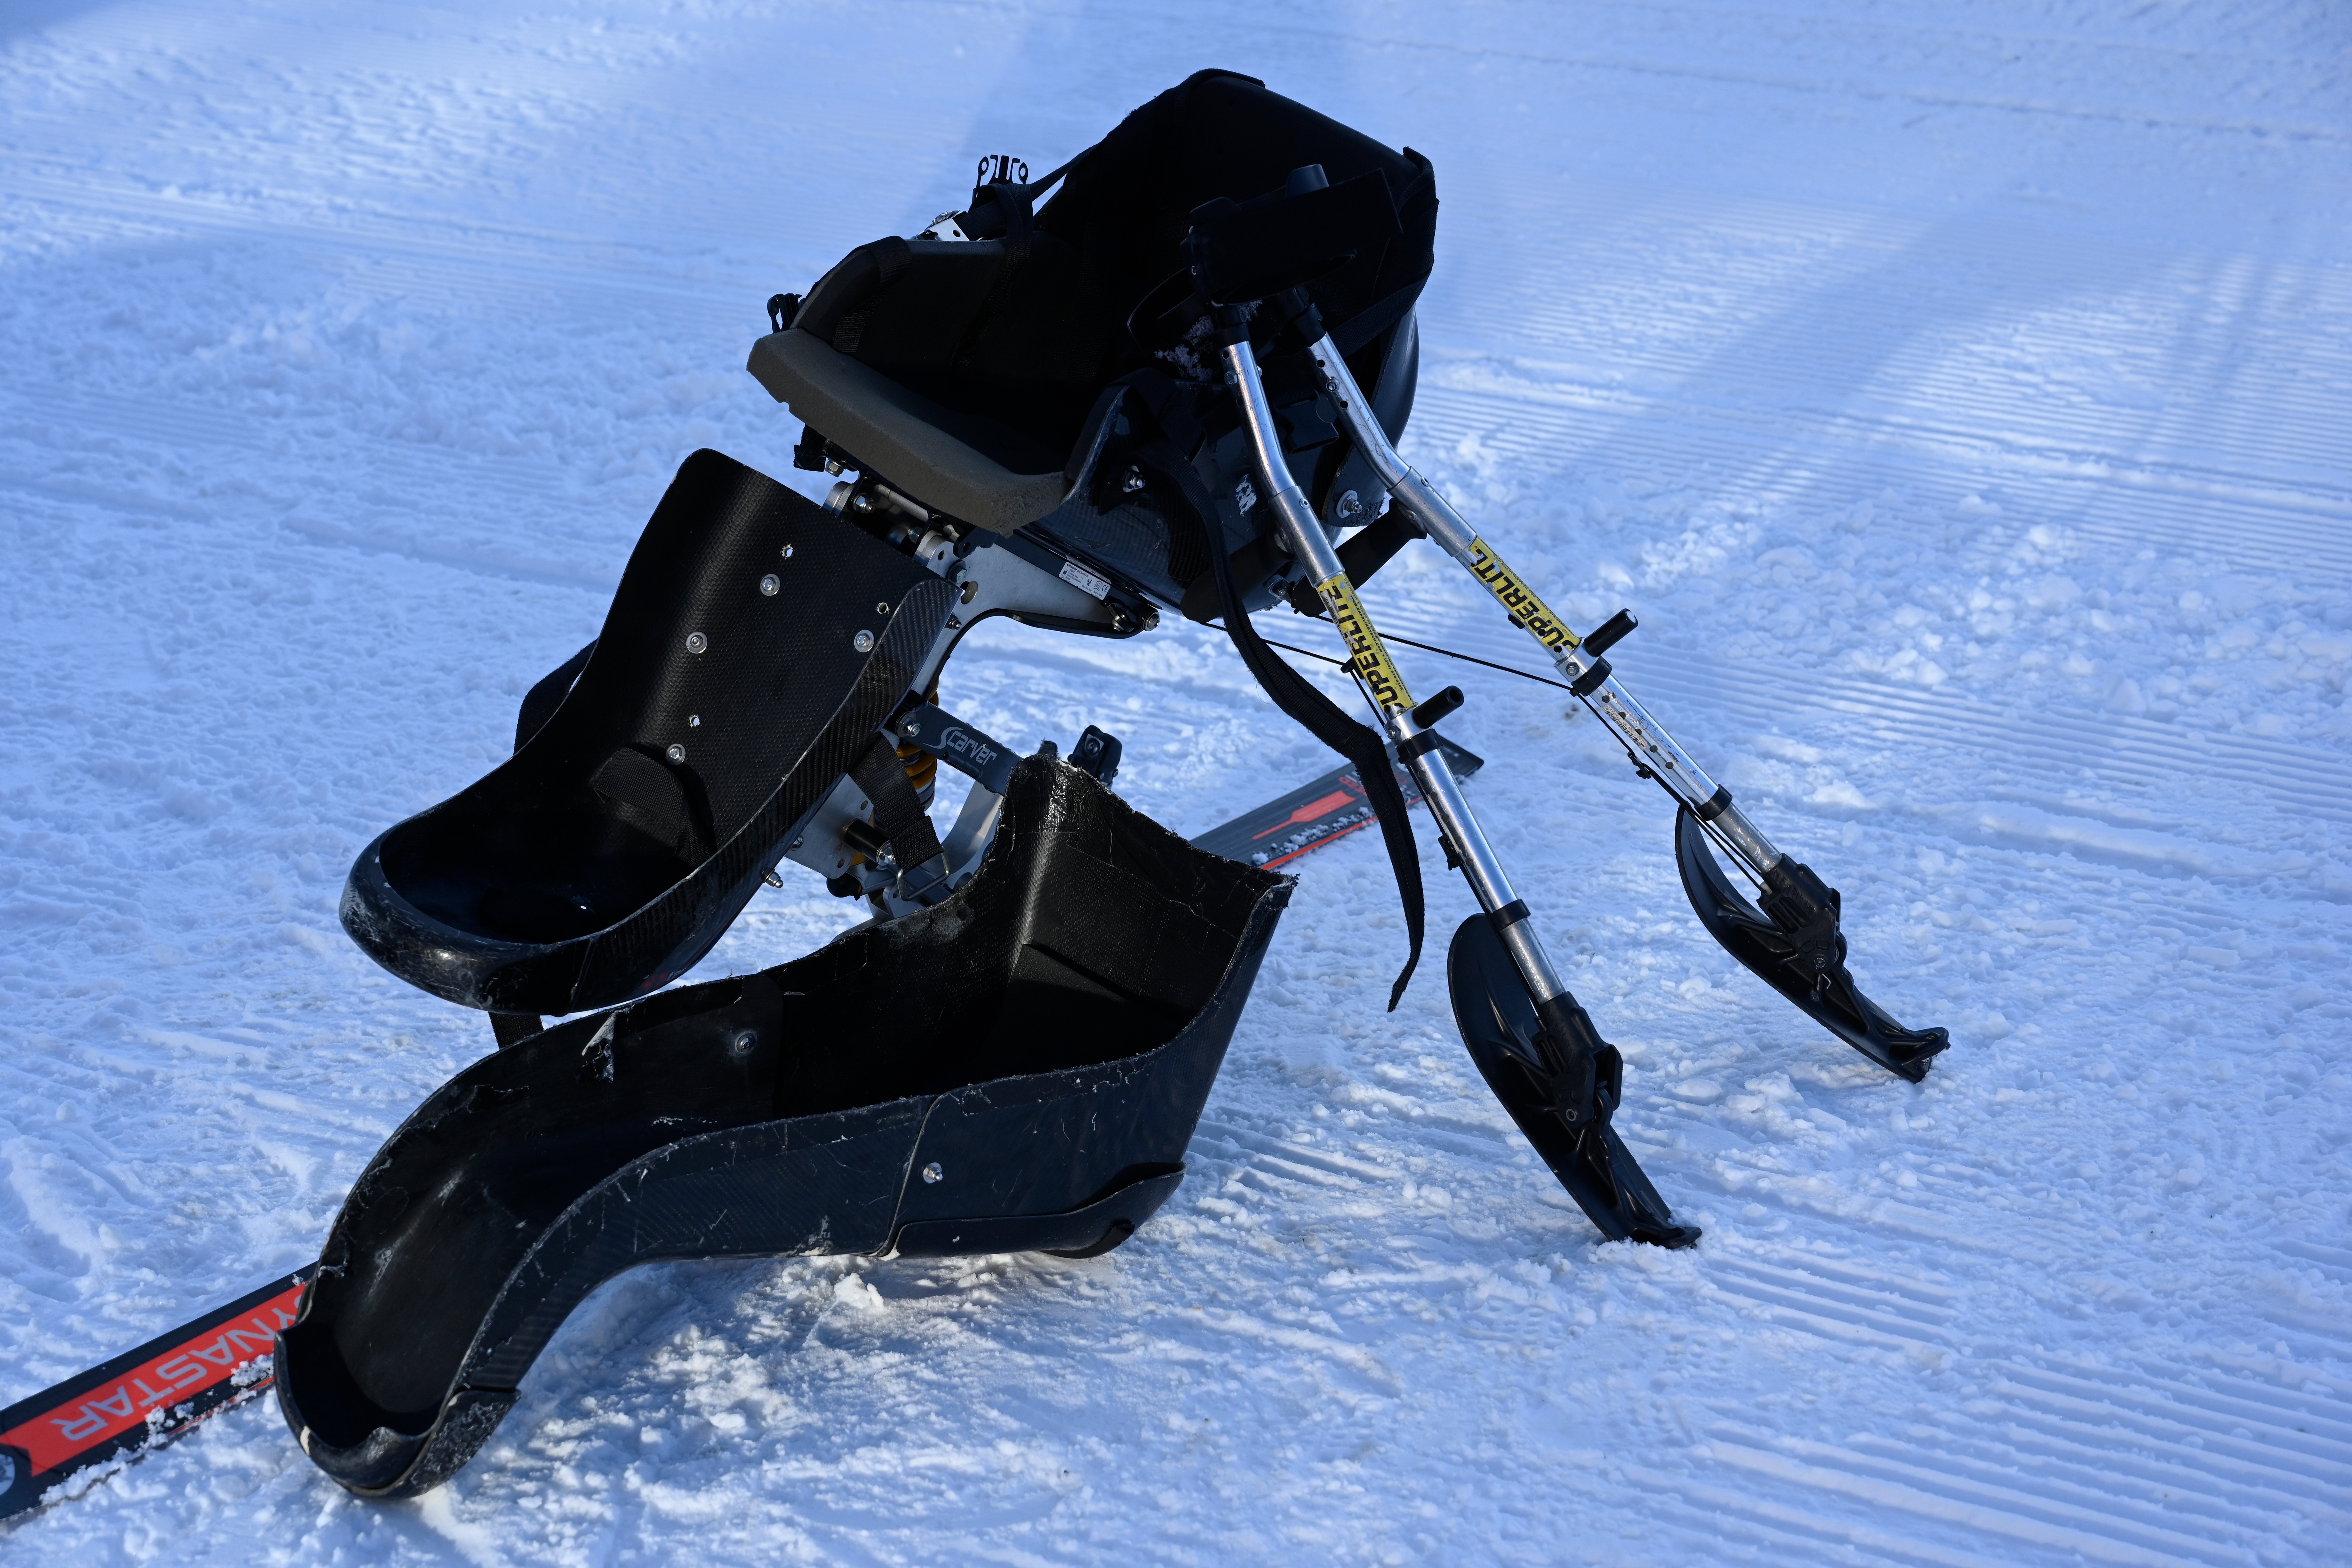 Mono-ski upright on the ground